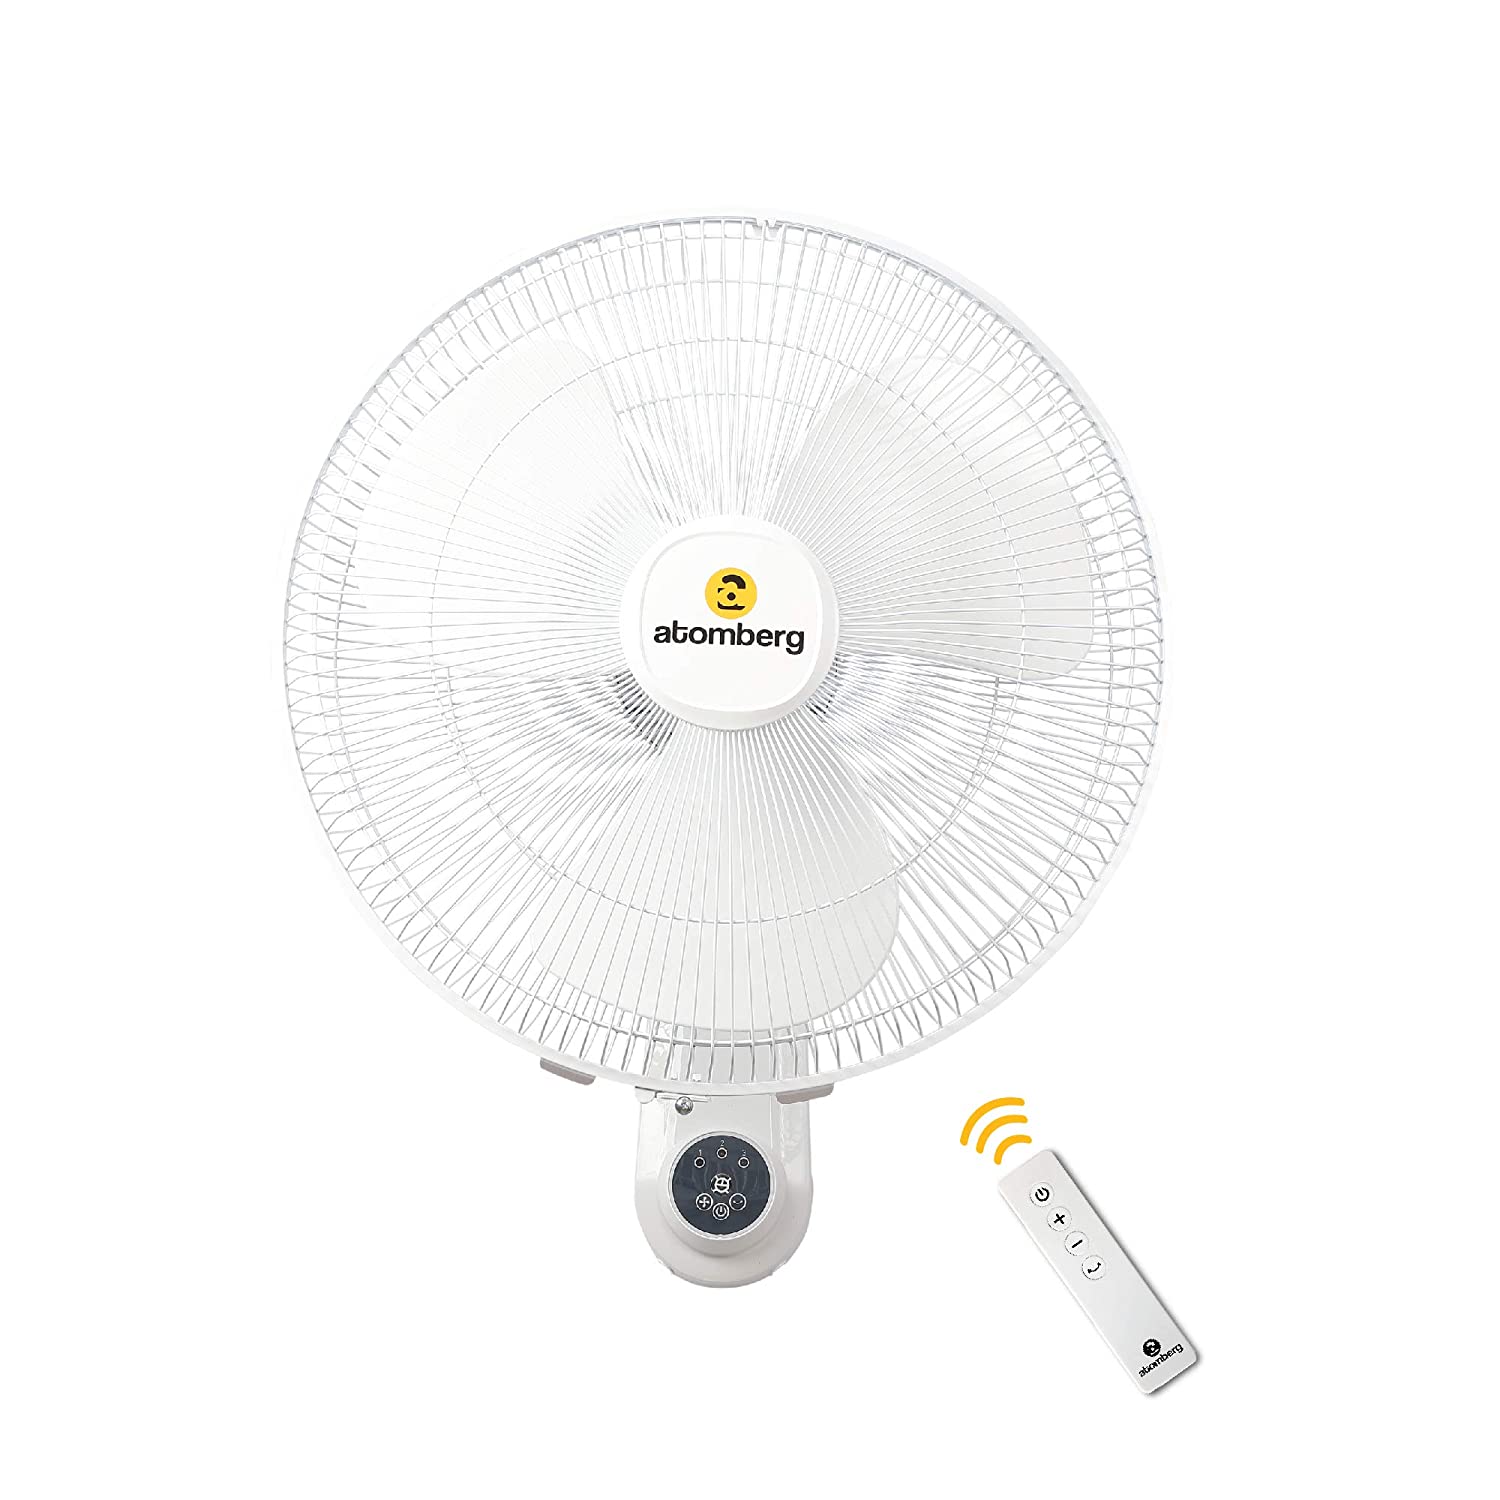 Atomberg Efficio Plus 400mm BLDC Wall Fan White | Georgee and Company